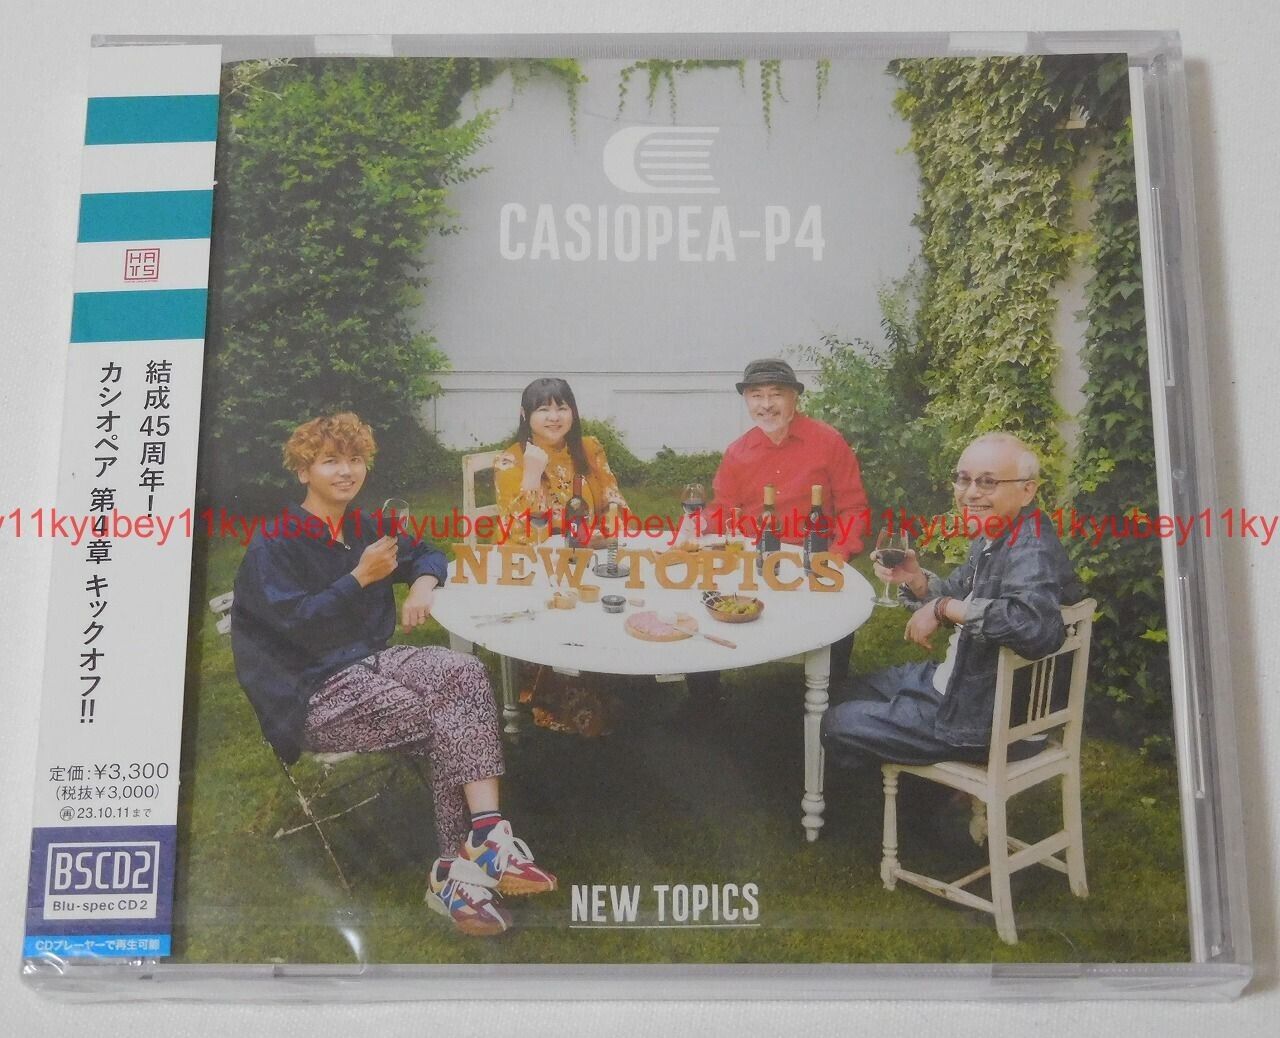 New CASIOPEA-P4 NEW TOPICS Blue-spec CD 2 Japan HUCD-10315 4582137893152